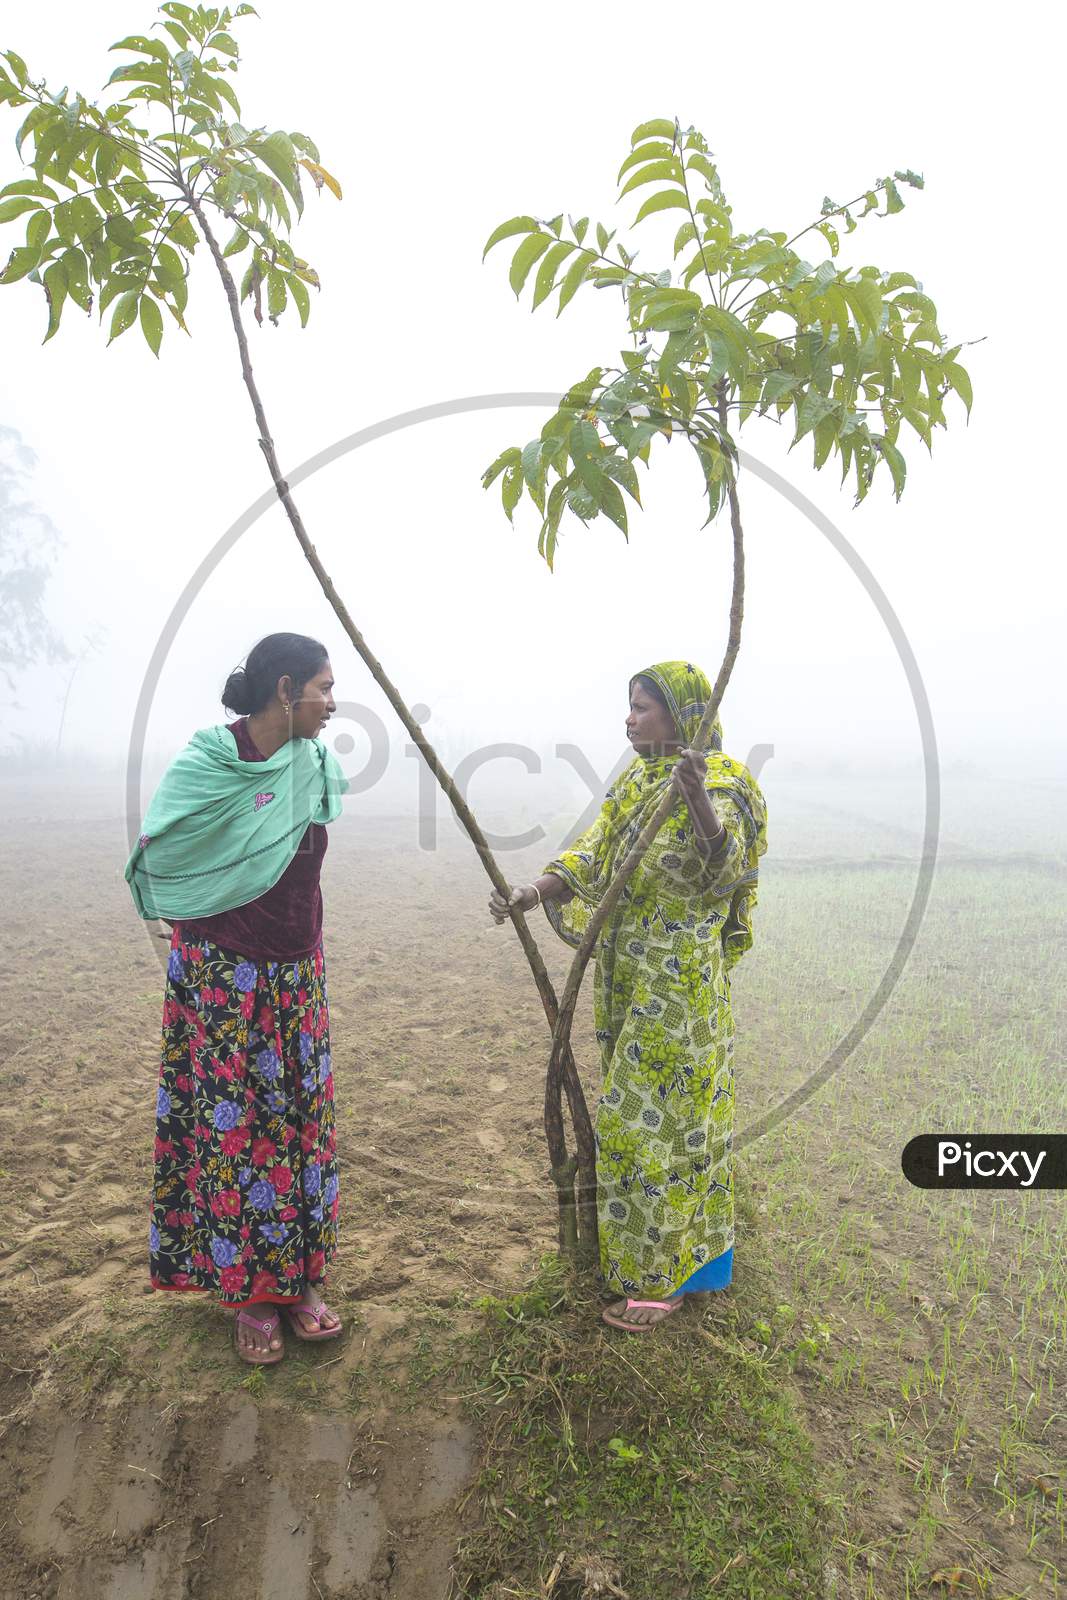 Bangladesh – January 06, 2014: On A Foggy Winter Morning, Two Woman Are Gossiping At Ranisankail, Thakurgaon.